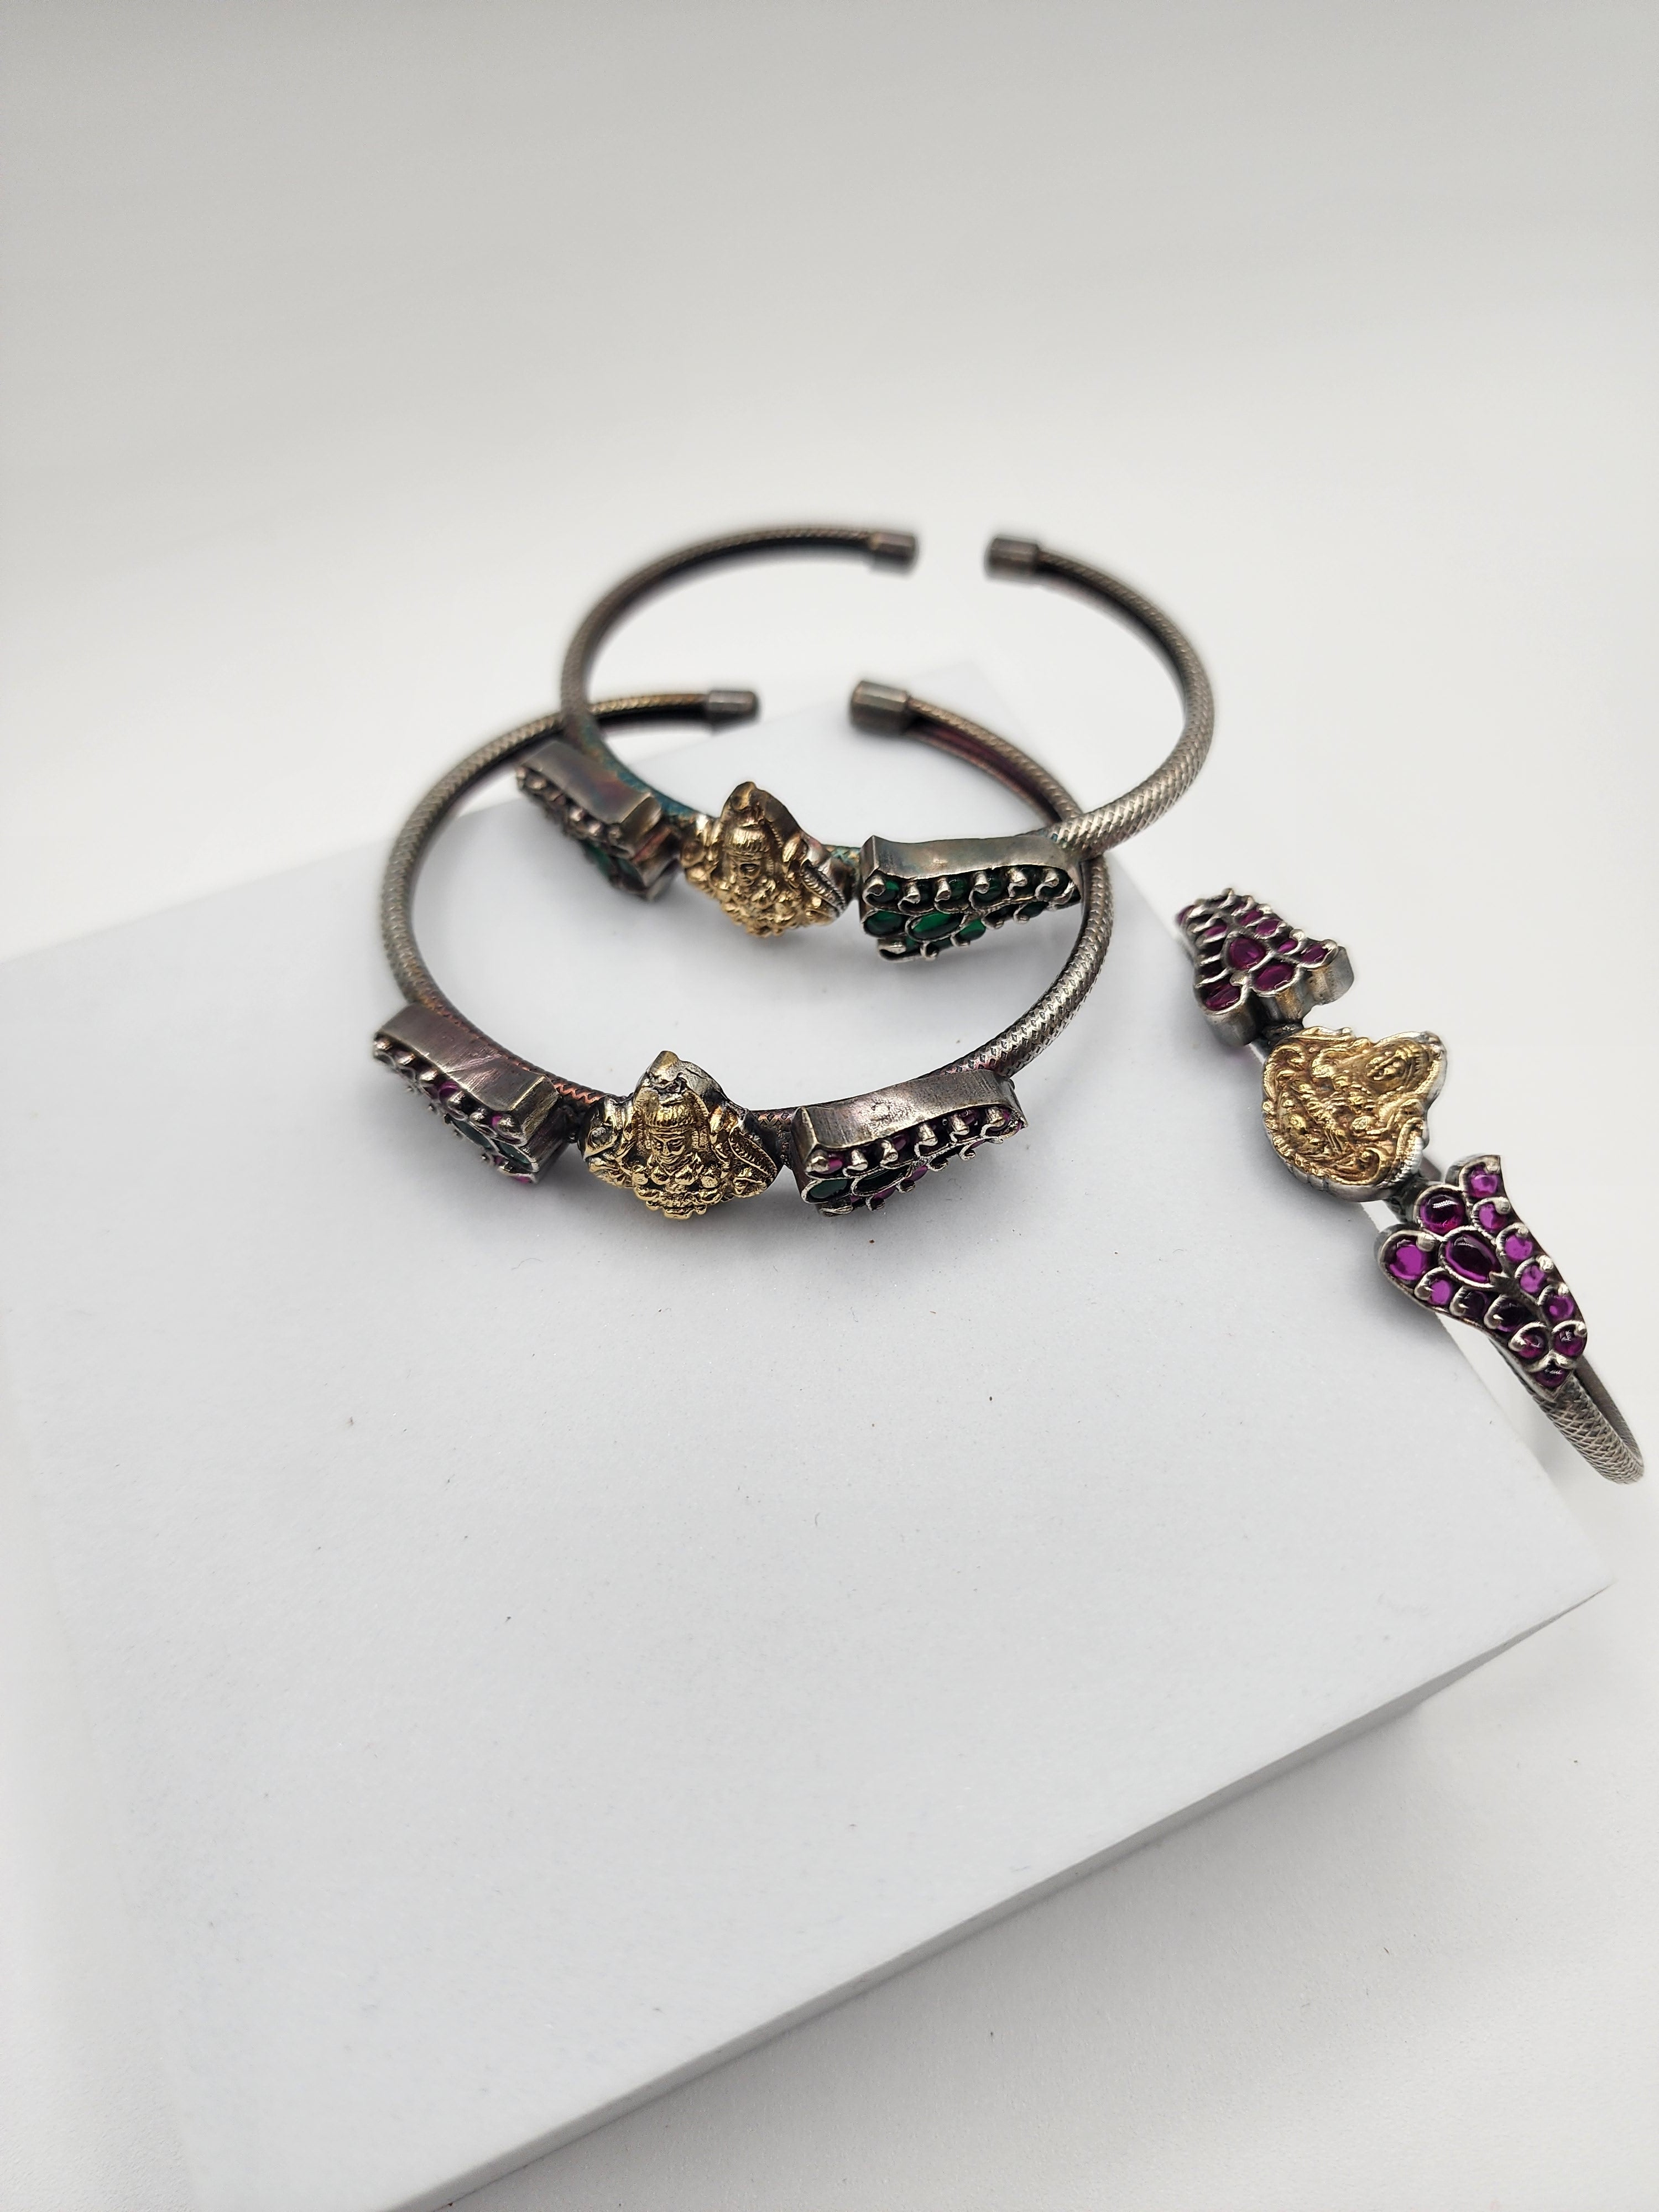 Dualtone kemp silveralike bracelet/ bangles